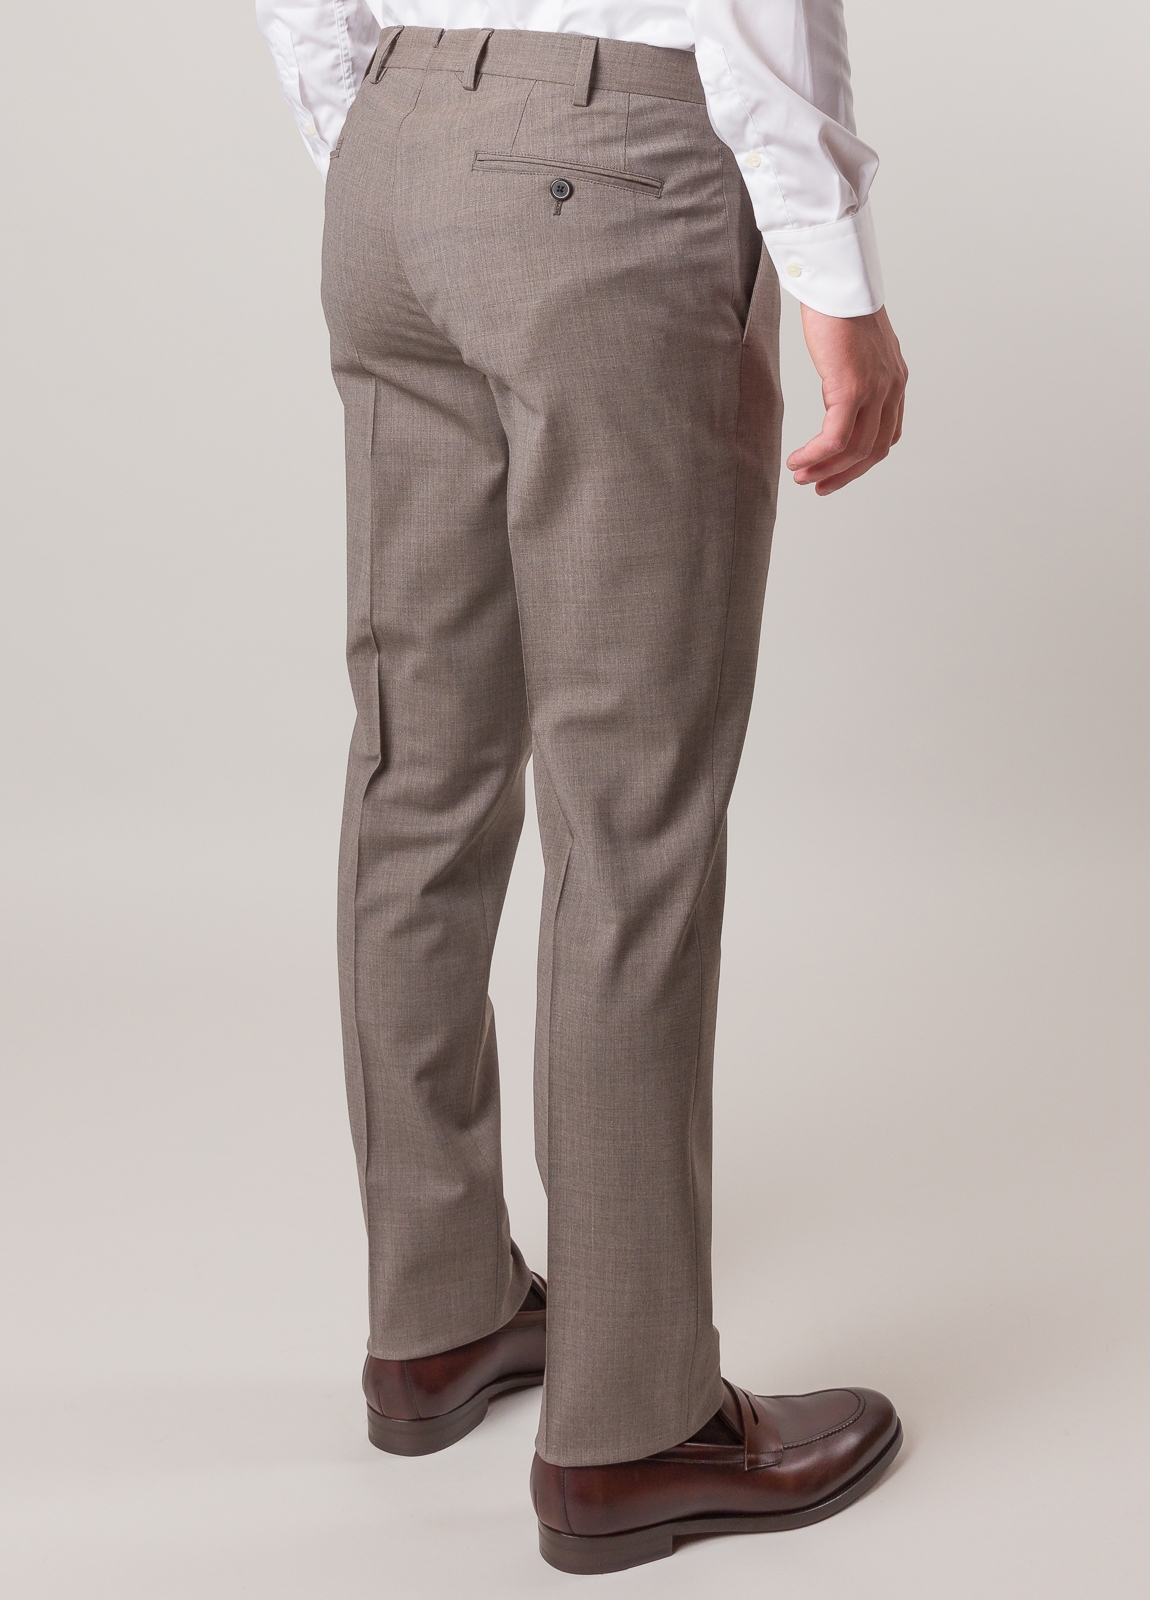 Pantalón vestir FUREST COLECCION color topo - Ítem3